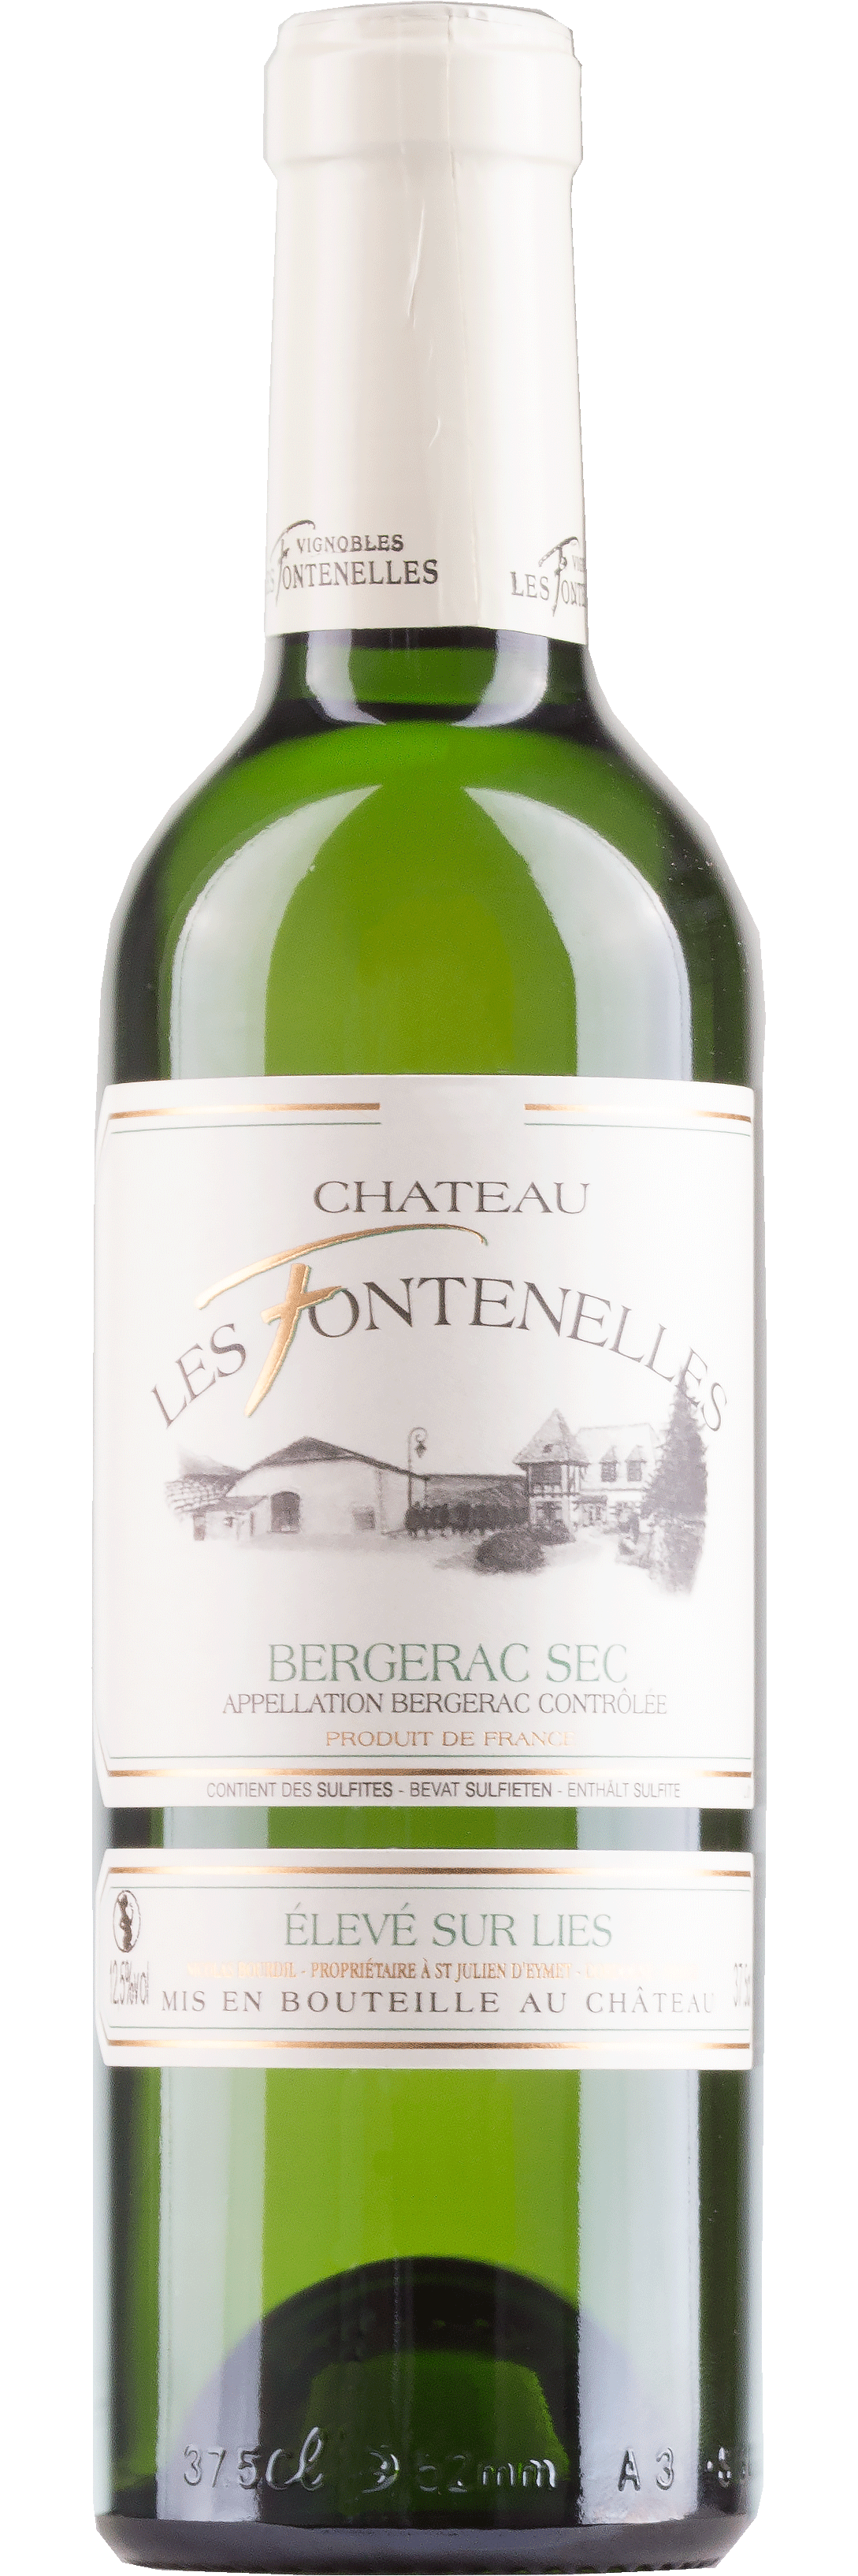 Chateau Les Fontenelles Bergerac Sec - Frankreich - Weißwein trocken - 0,375l - 12,5% vol